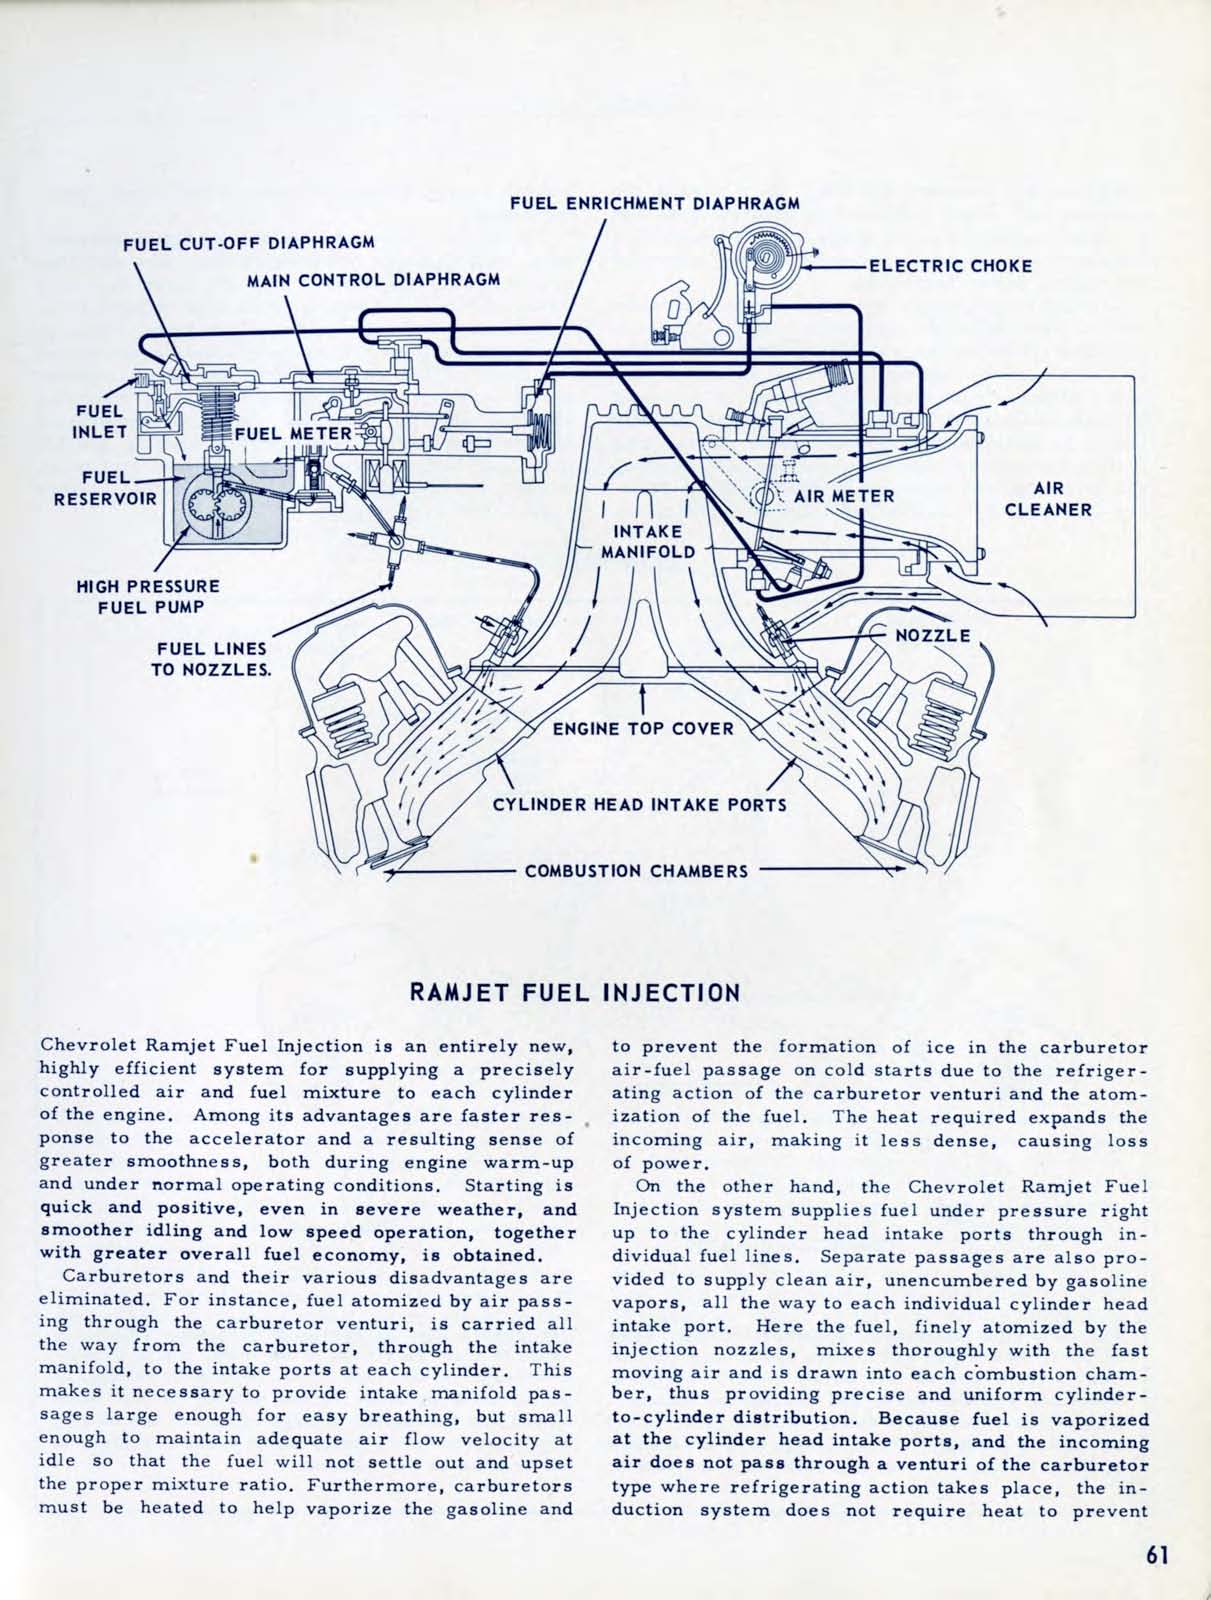 1957_Chevrolet_Engineering_Features-061